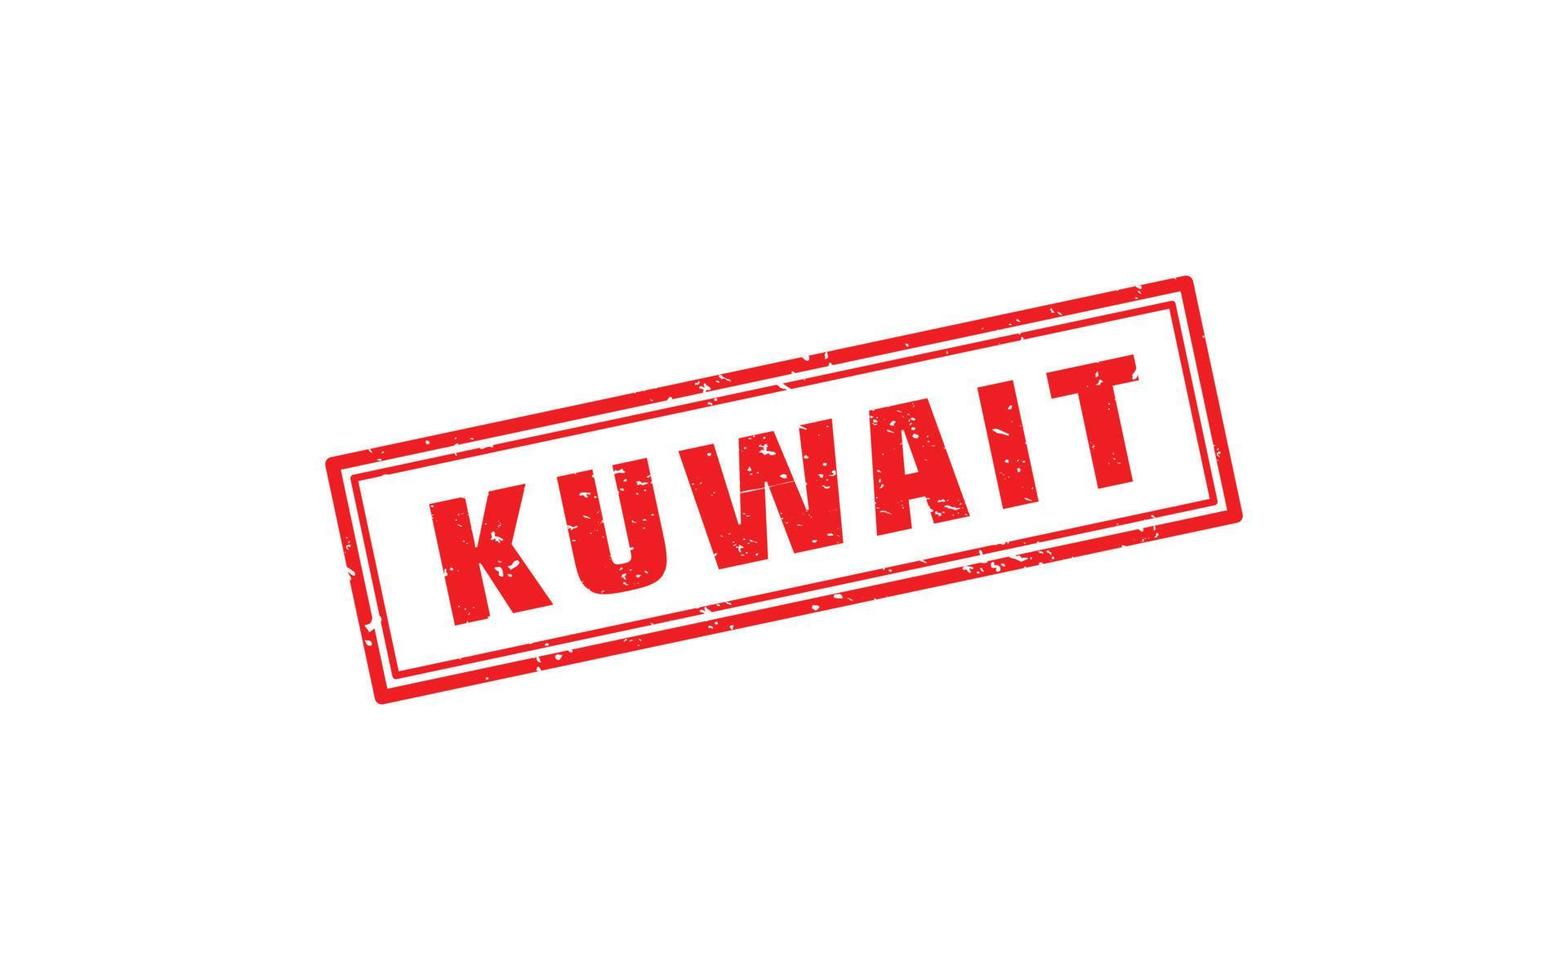 borracha de carimbo do kuwait com estilo grunge em fundo branco vetor